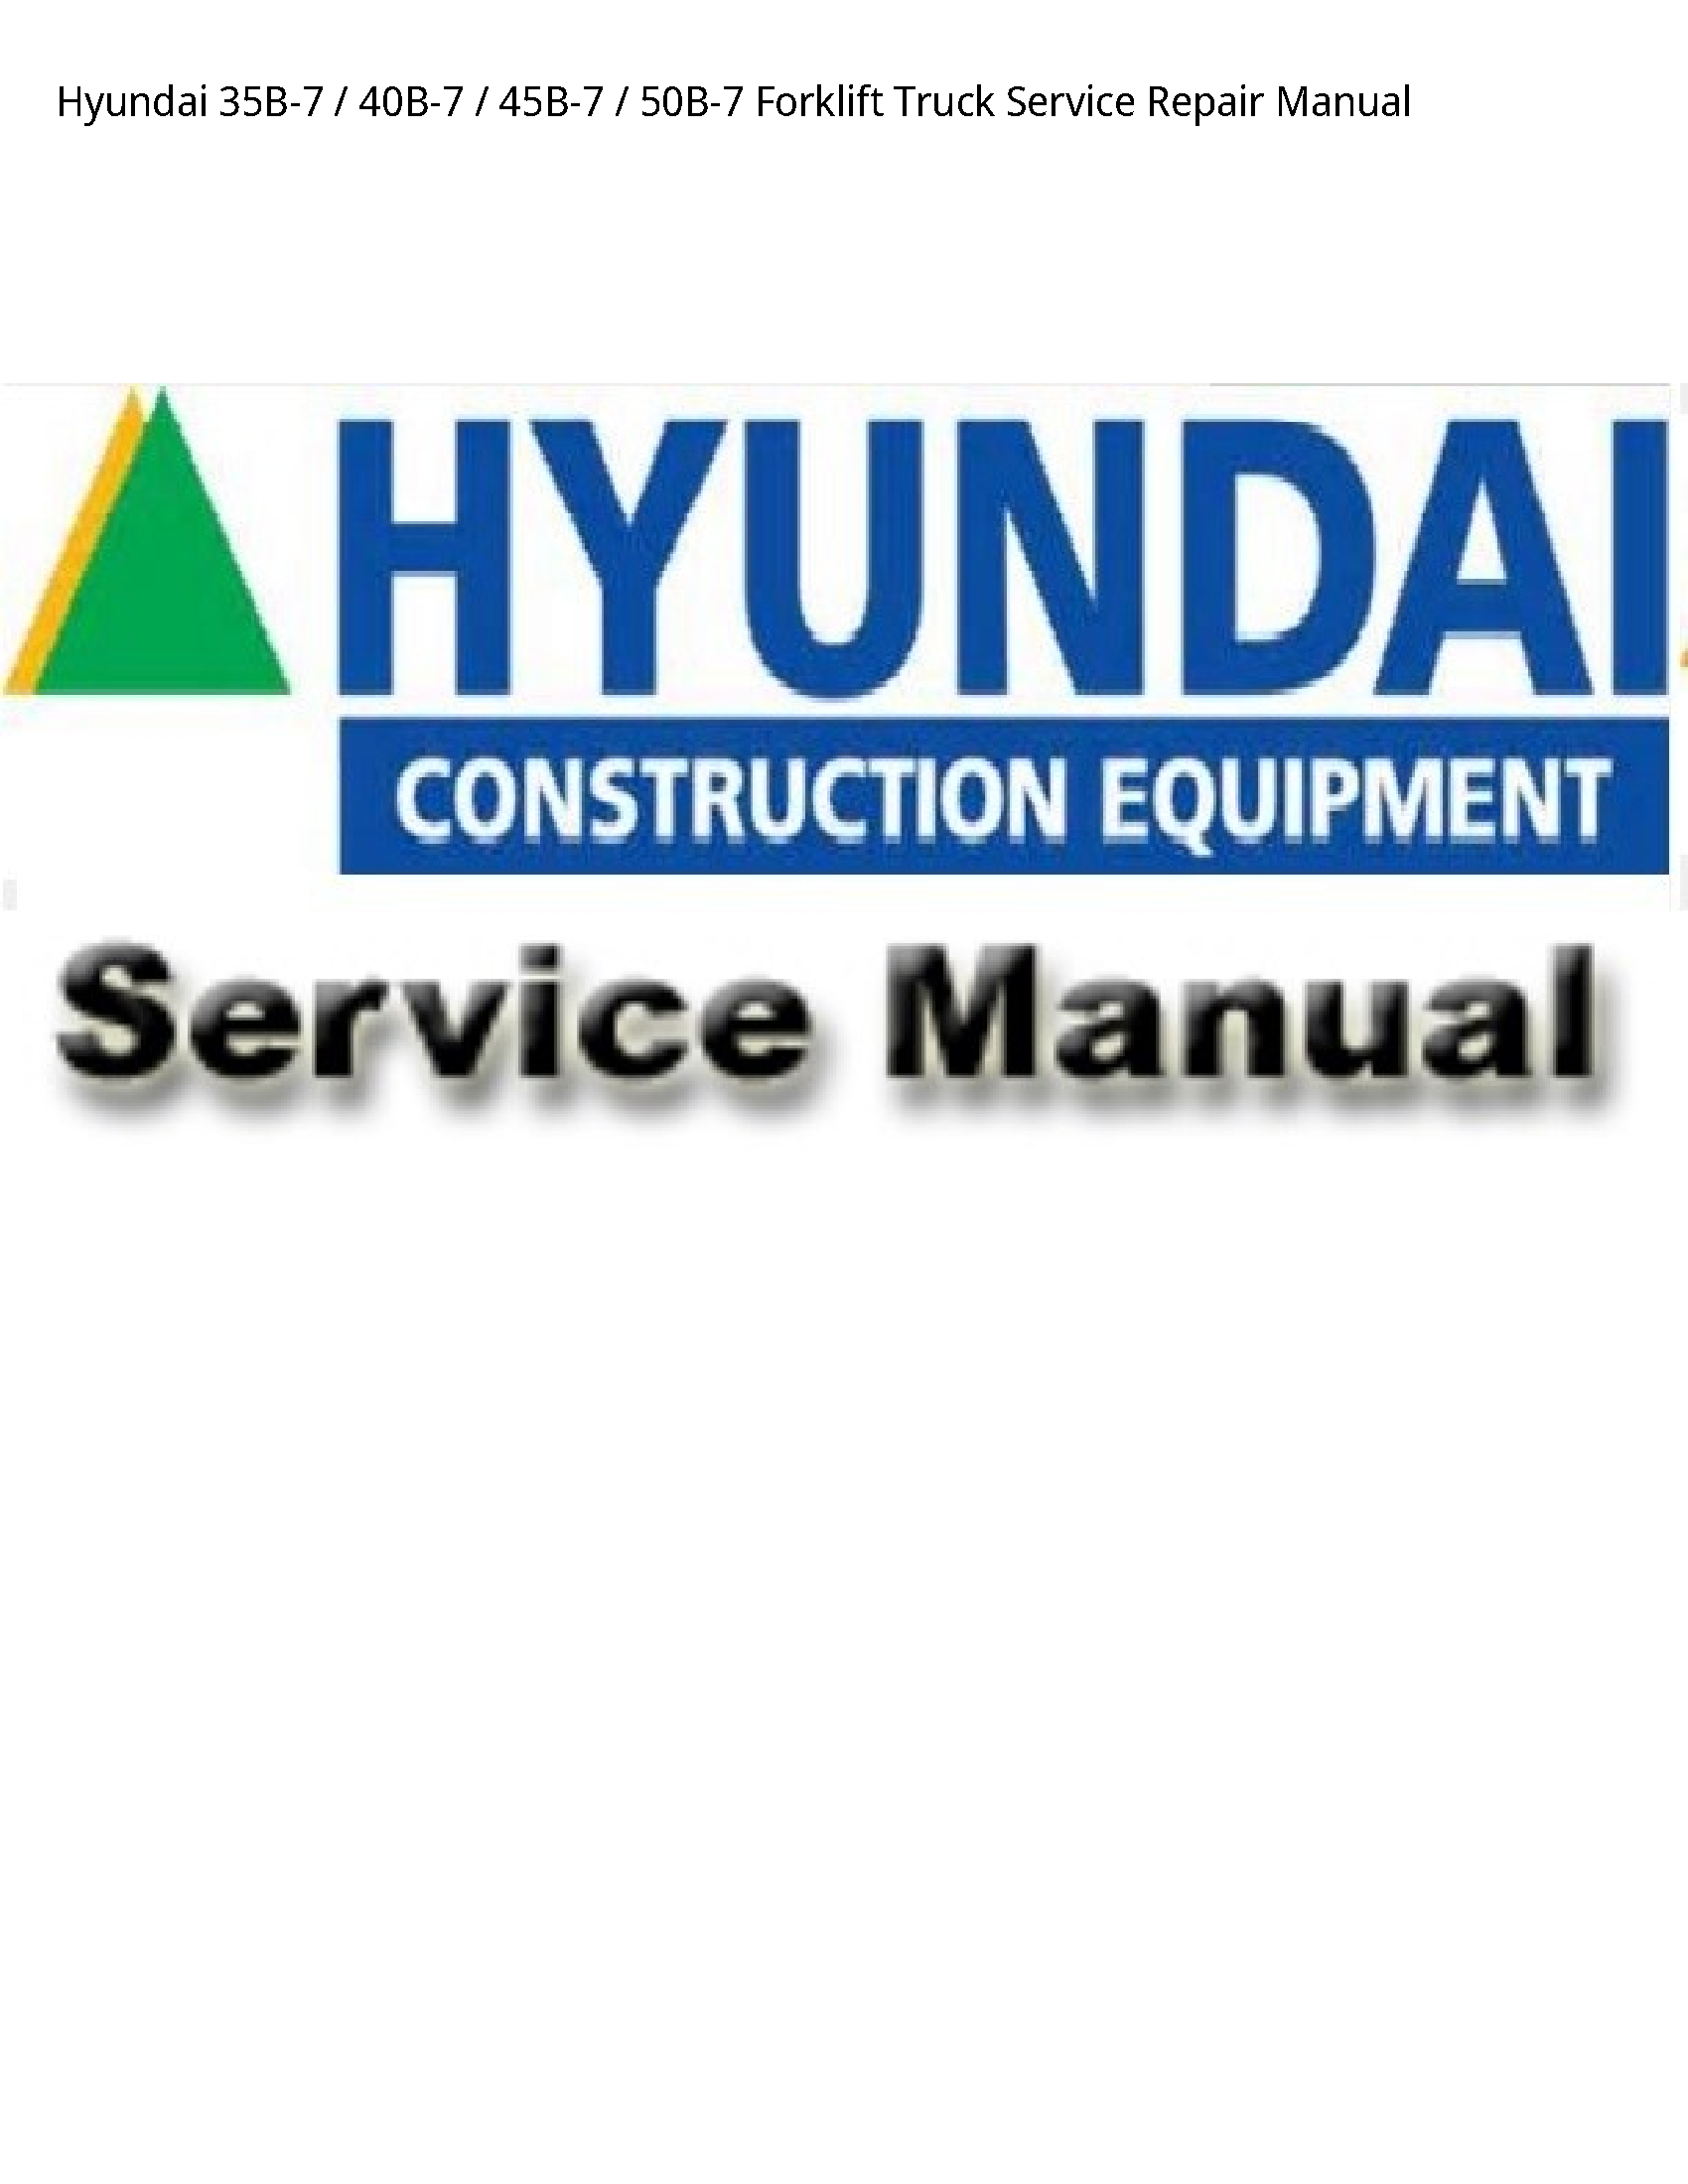 Hyundai 35B-7 Forklift Truck manual